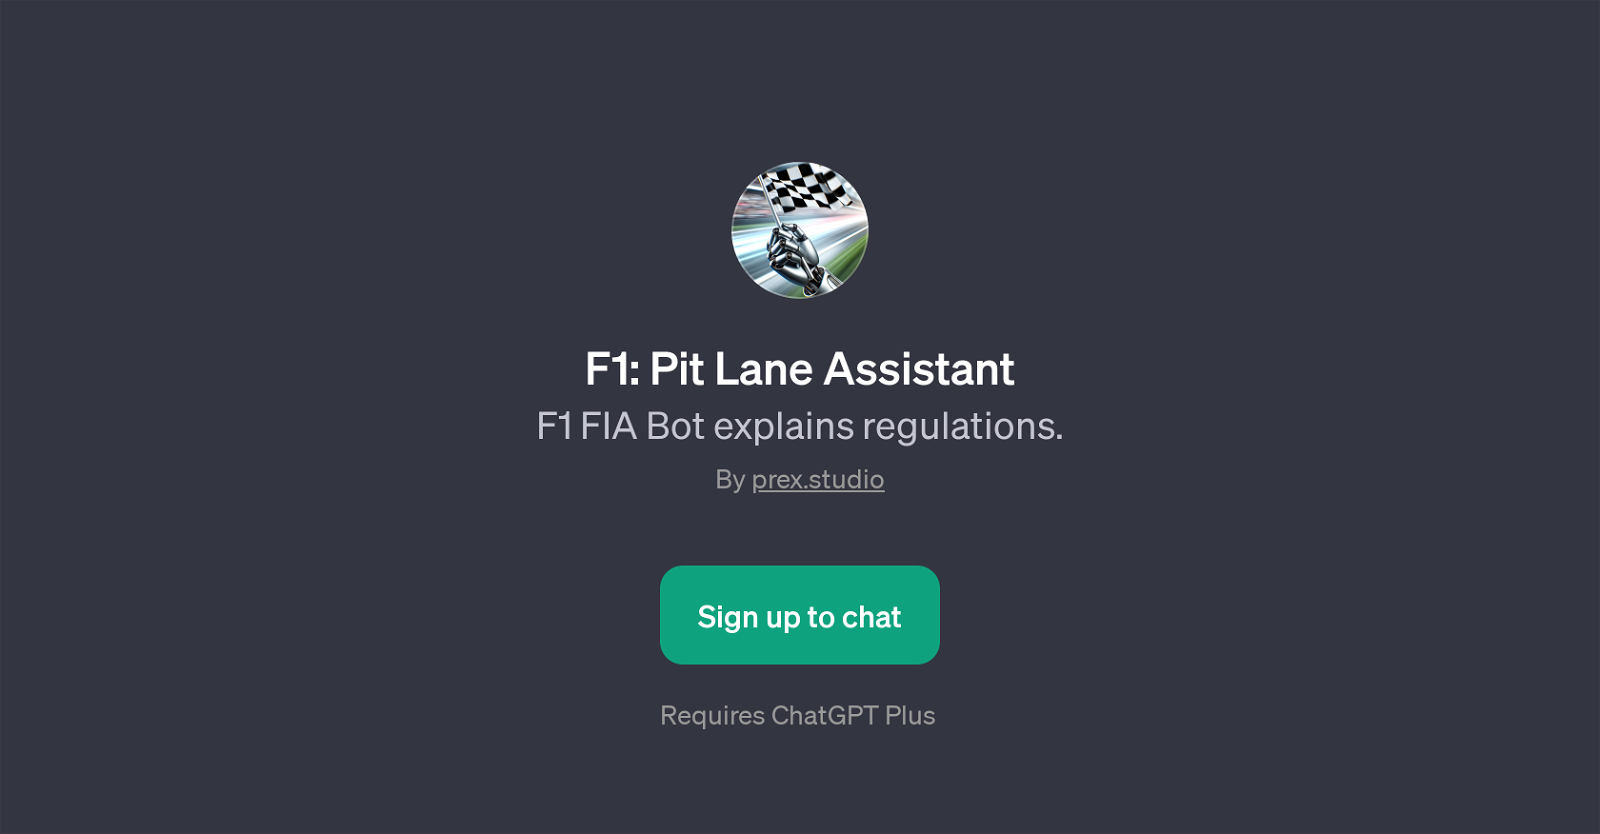 F1: Pit Lane Assistant website